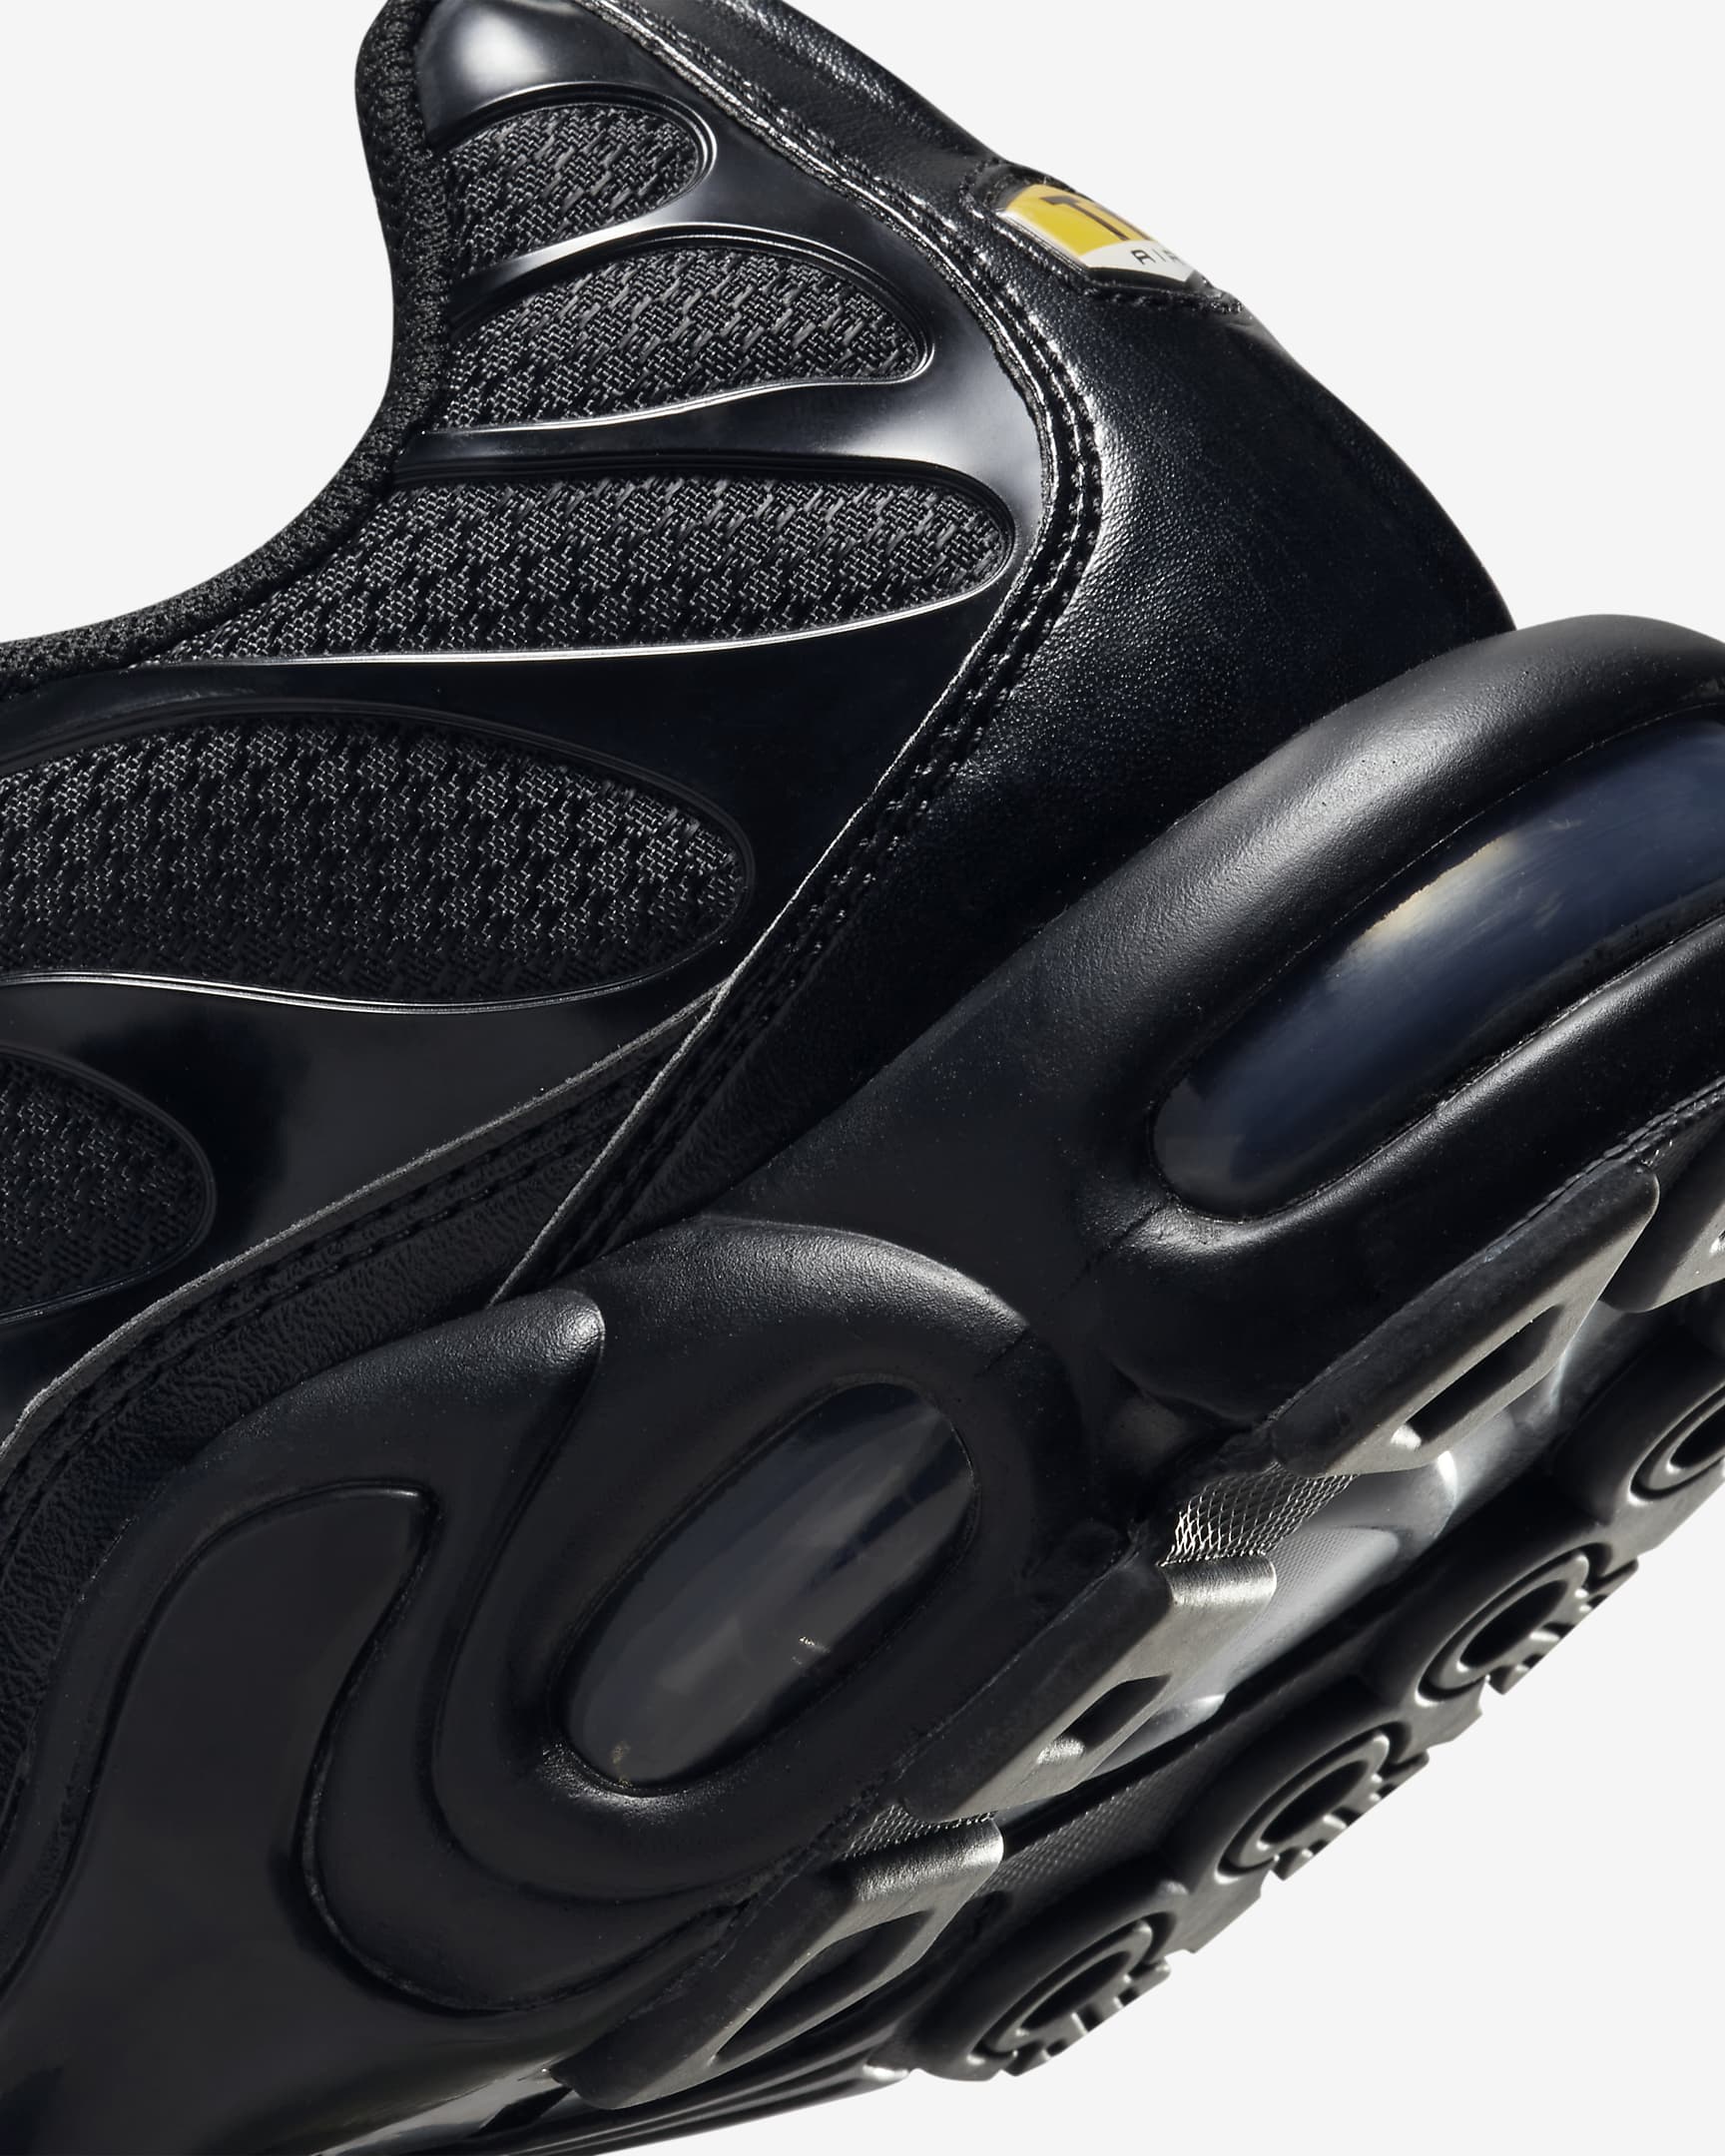 Nike Air Max Plus Men's Shoes - Black/Black/Black